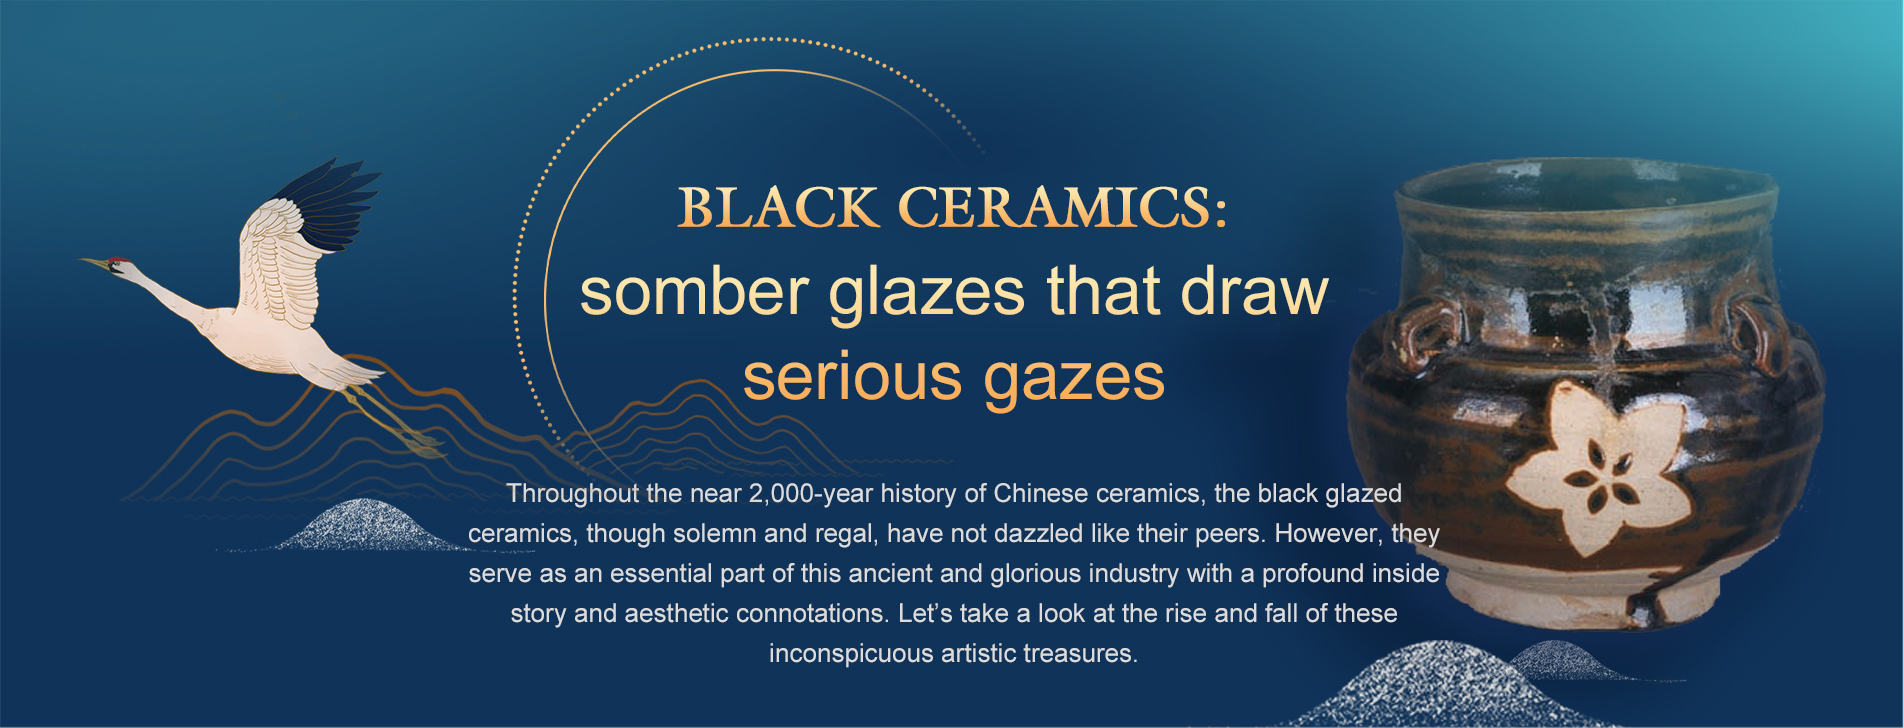 Black ceramics: somber glazes that draw serious gazes